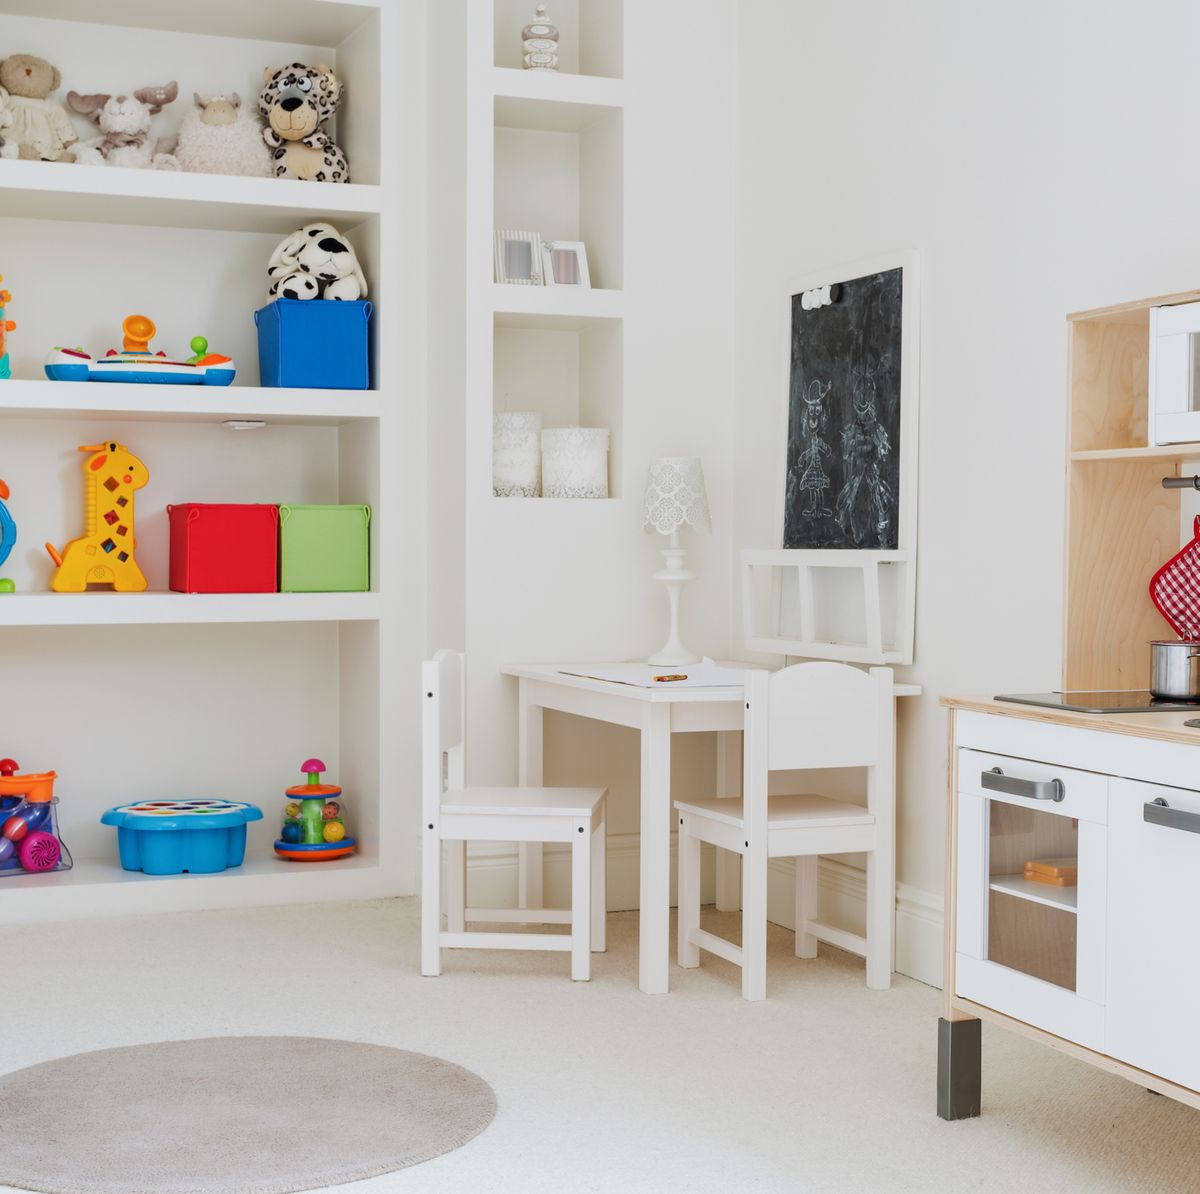 DIY LEGO Storage Pick Up & Play Mat  Diy toy storage, Diy for kids, Kids  room organization diy